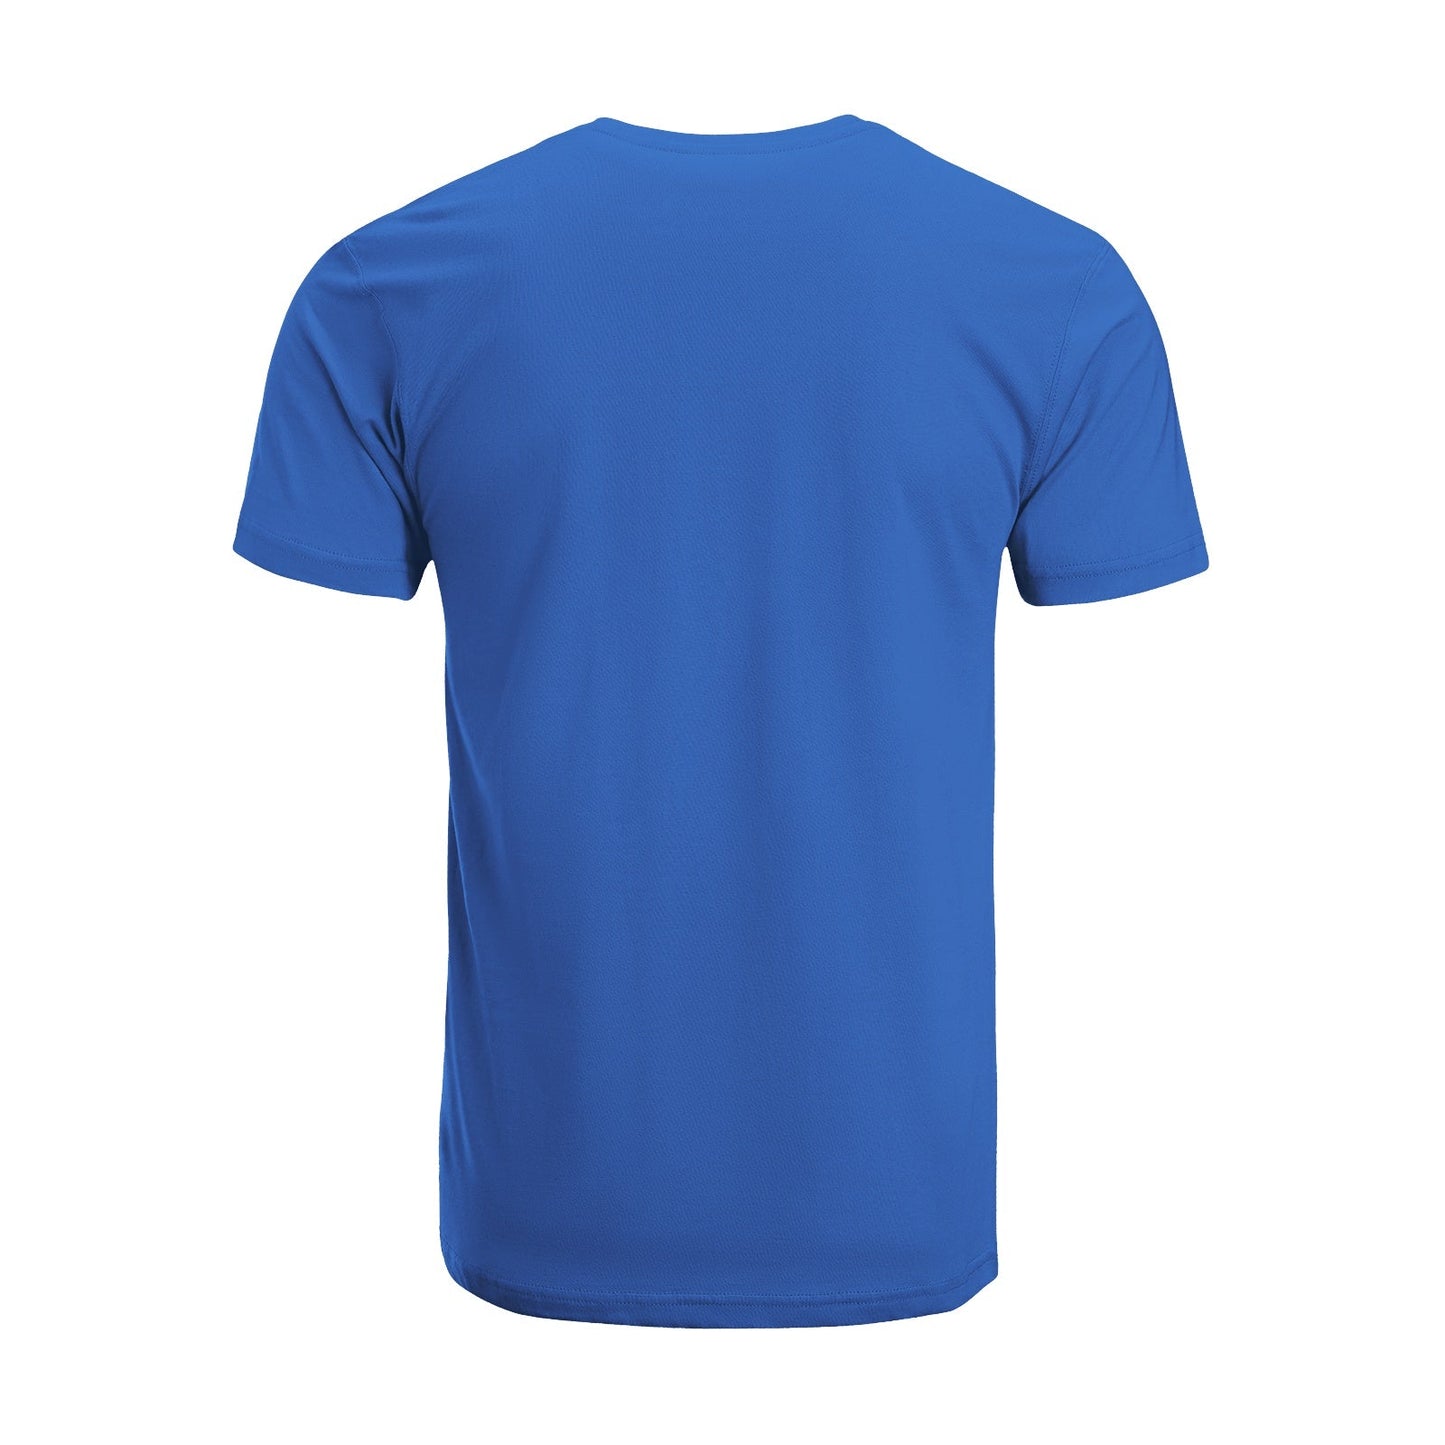 Unisex Short Sleeve Crew Neck Cotton Jersey T-Shirt MOM 45